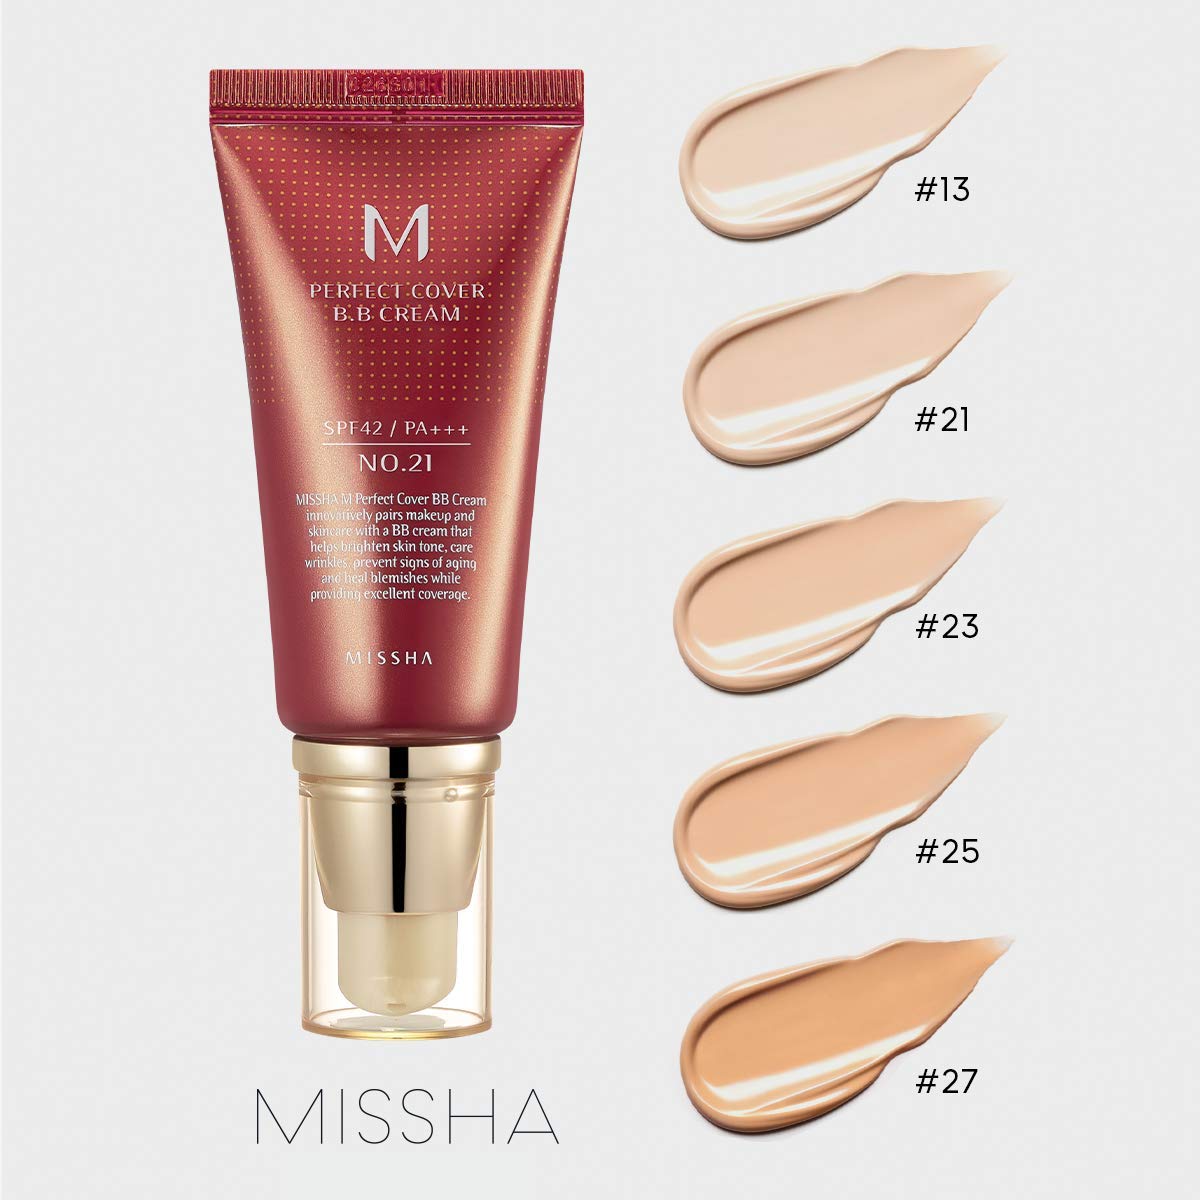 Missha M Perfect Cover BB Cream SPF 42 PA+++ 50ml